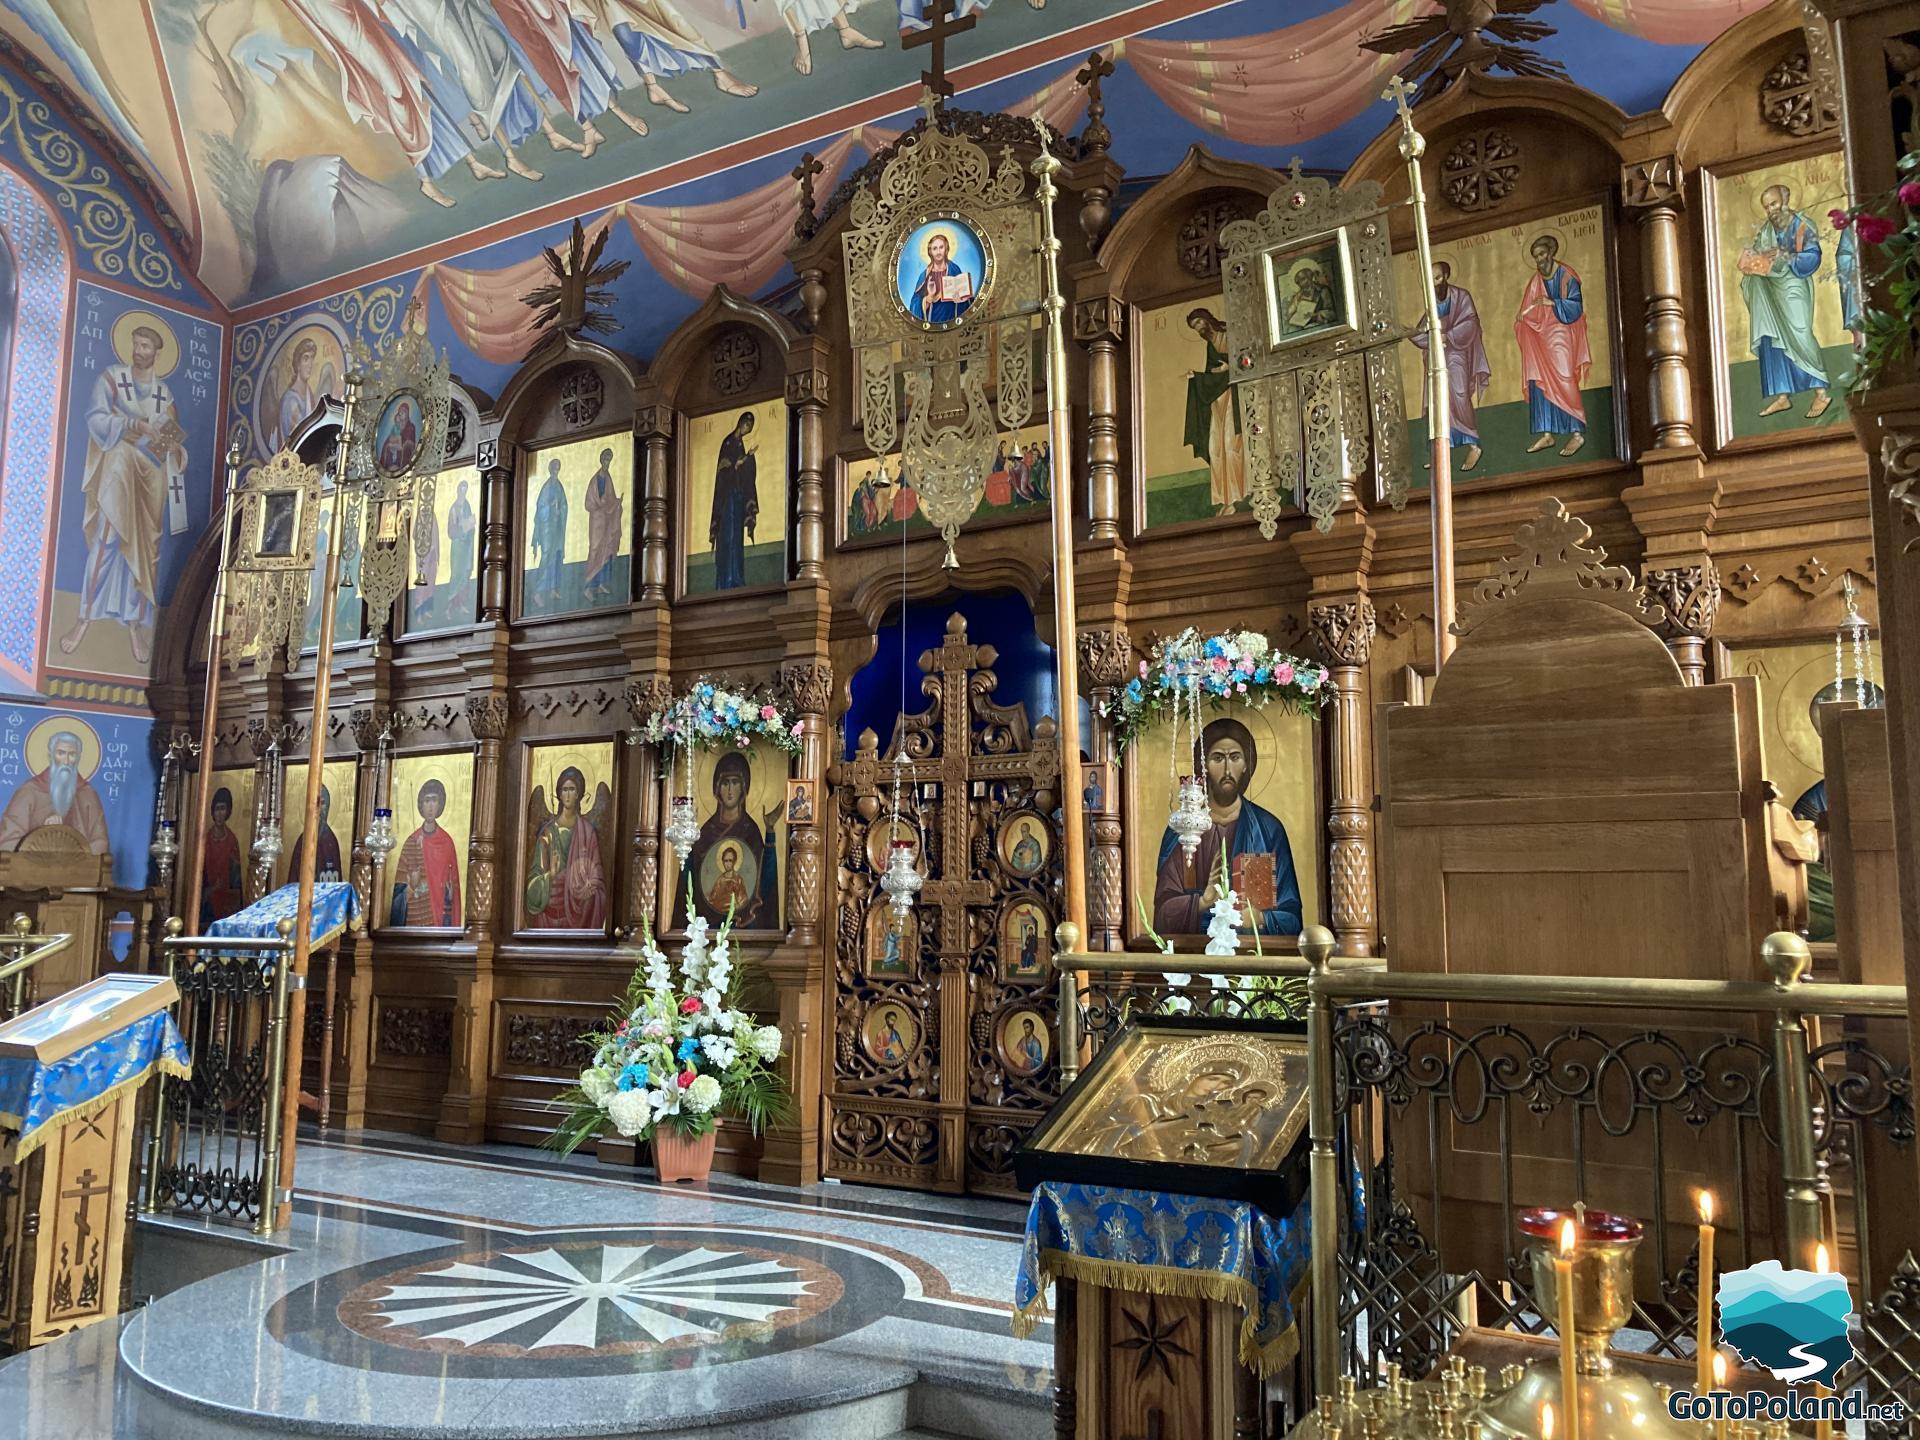 richly decorated iconostasis